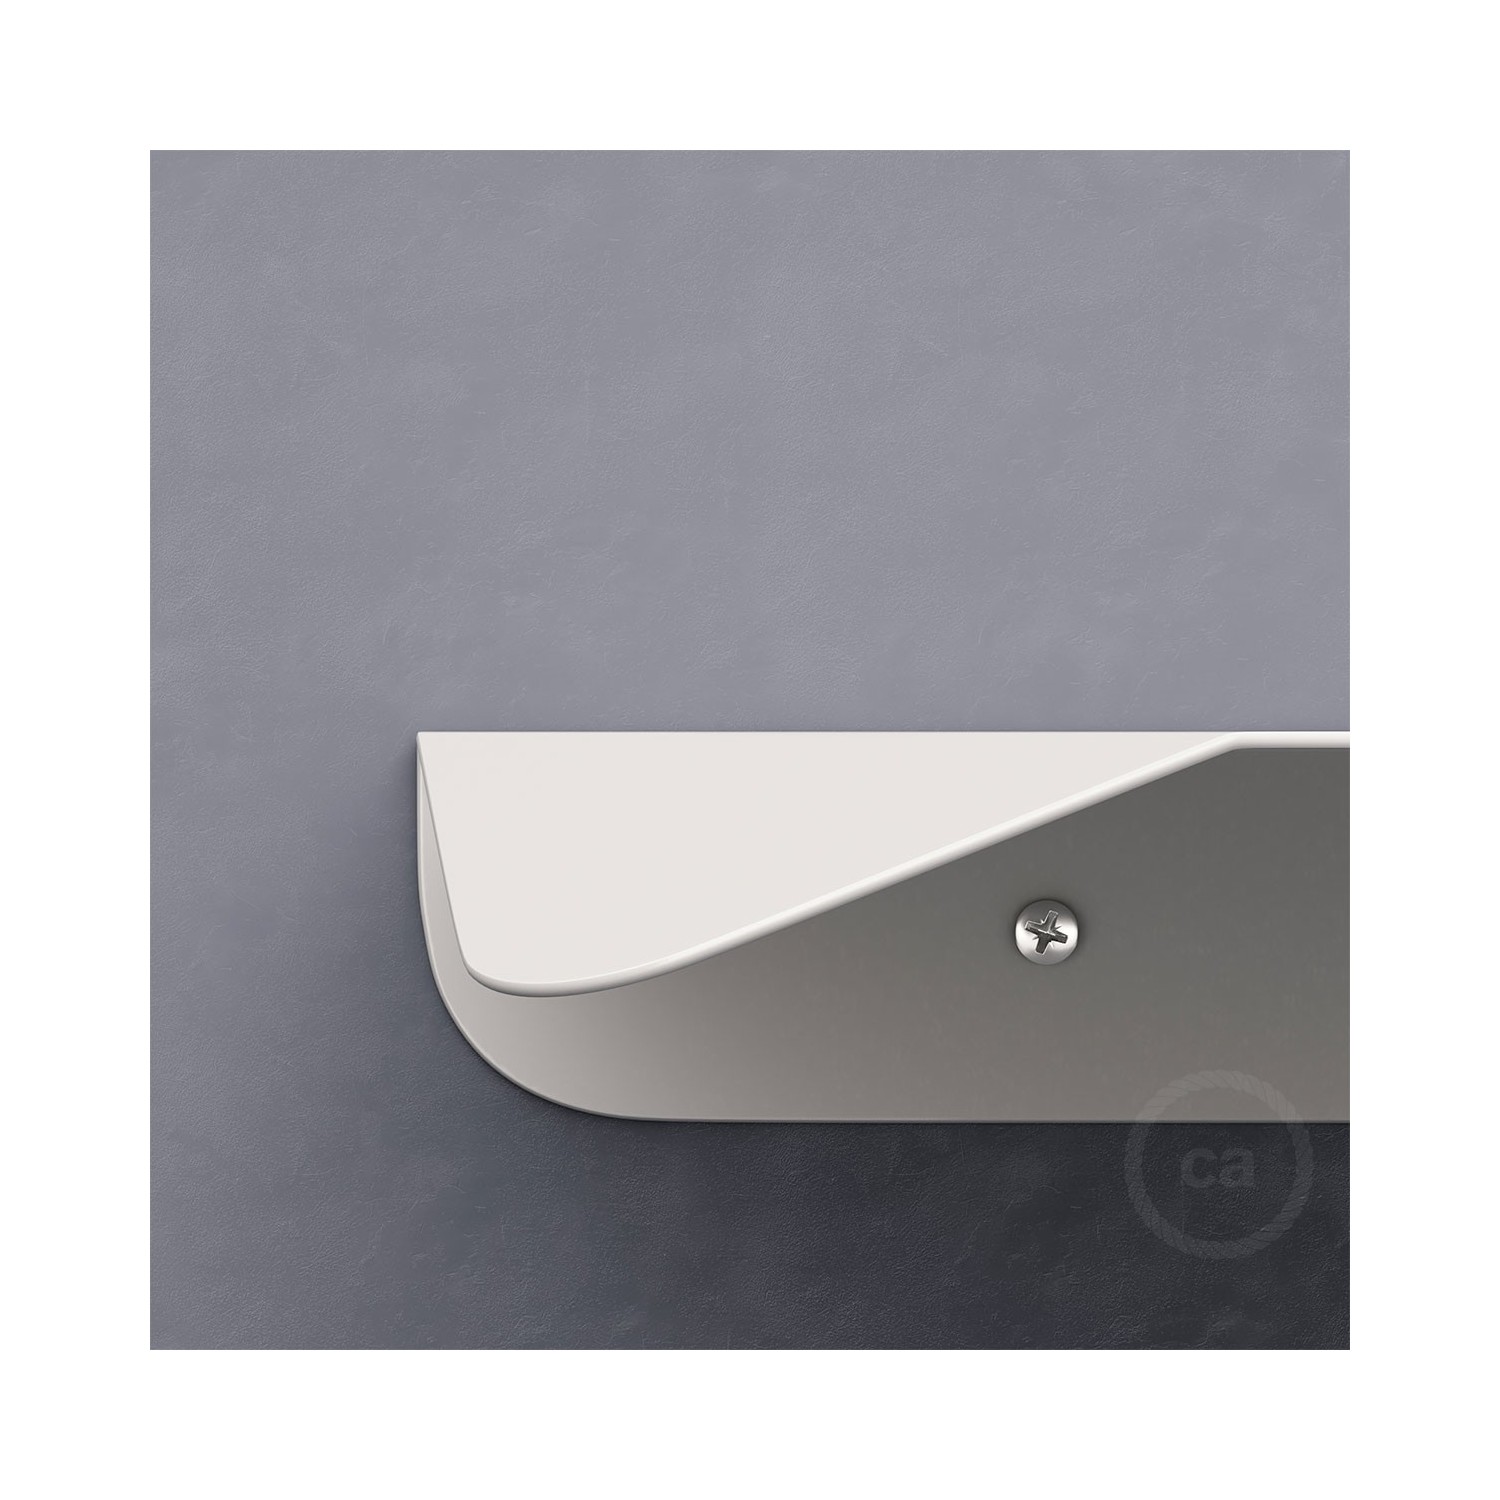 Magnetico®-Shelf Blanco, estante de metal para Magnetico®-Plug